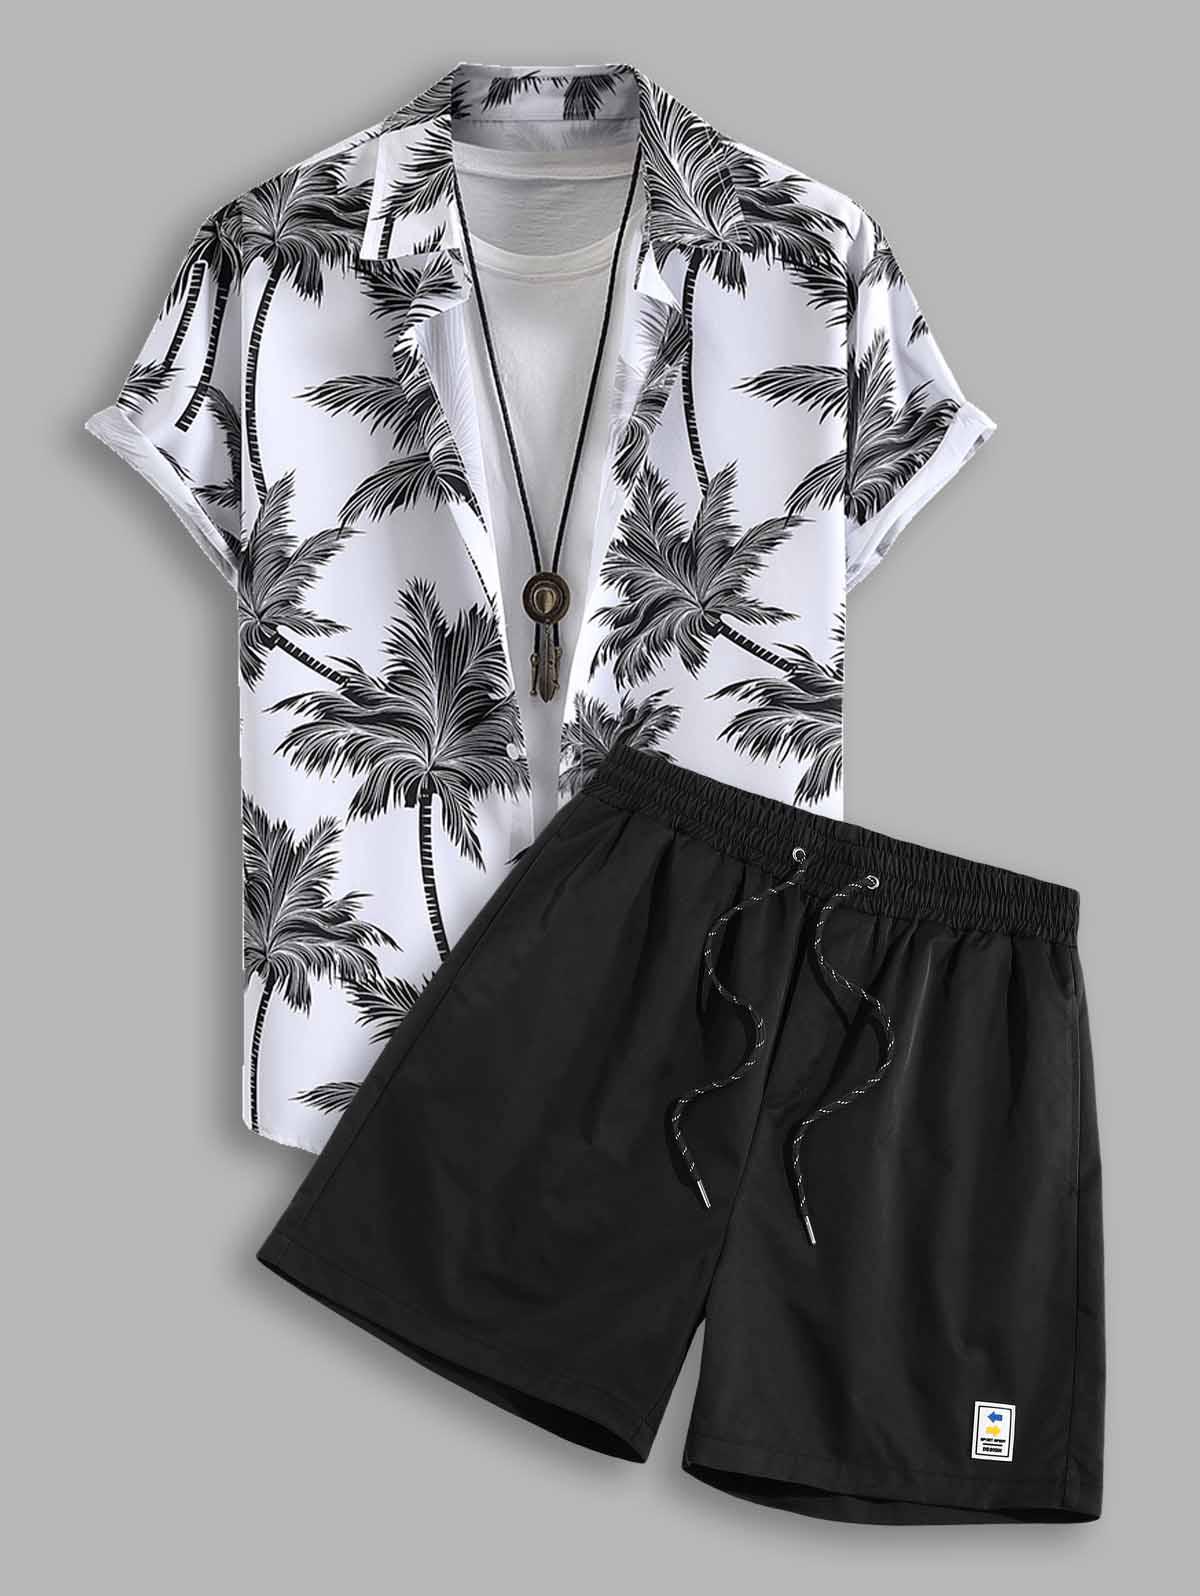 ZAFUL Men's Tropical Coconut Tree Print Short Sleeve Shirt and Label Design Drawstring Shorts Two Pieces Set Black